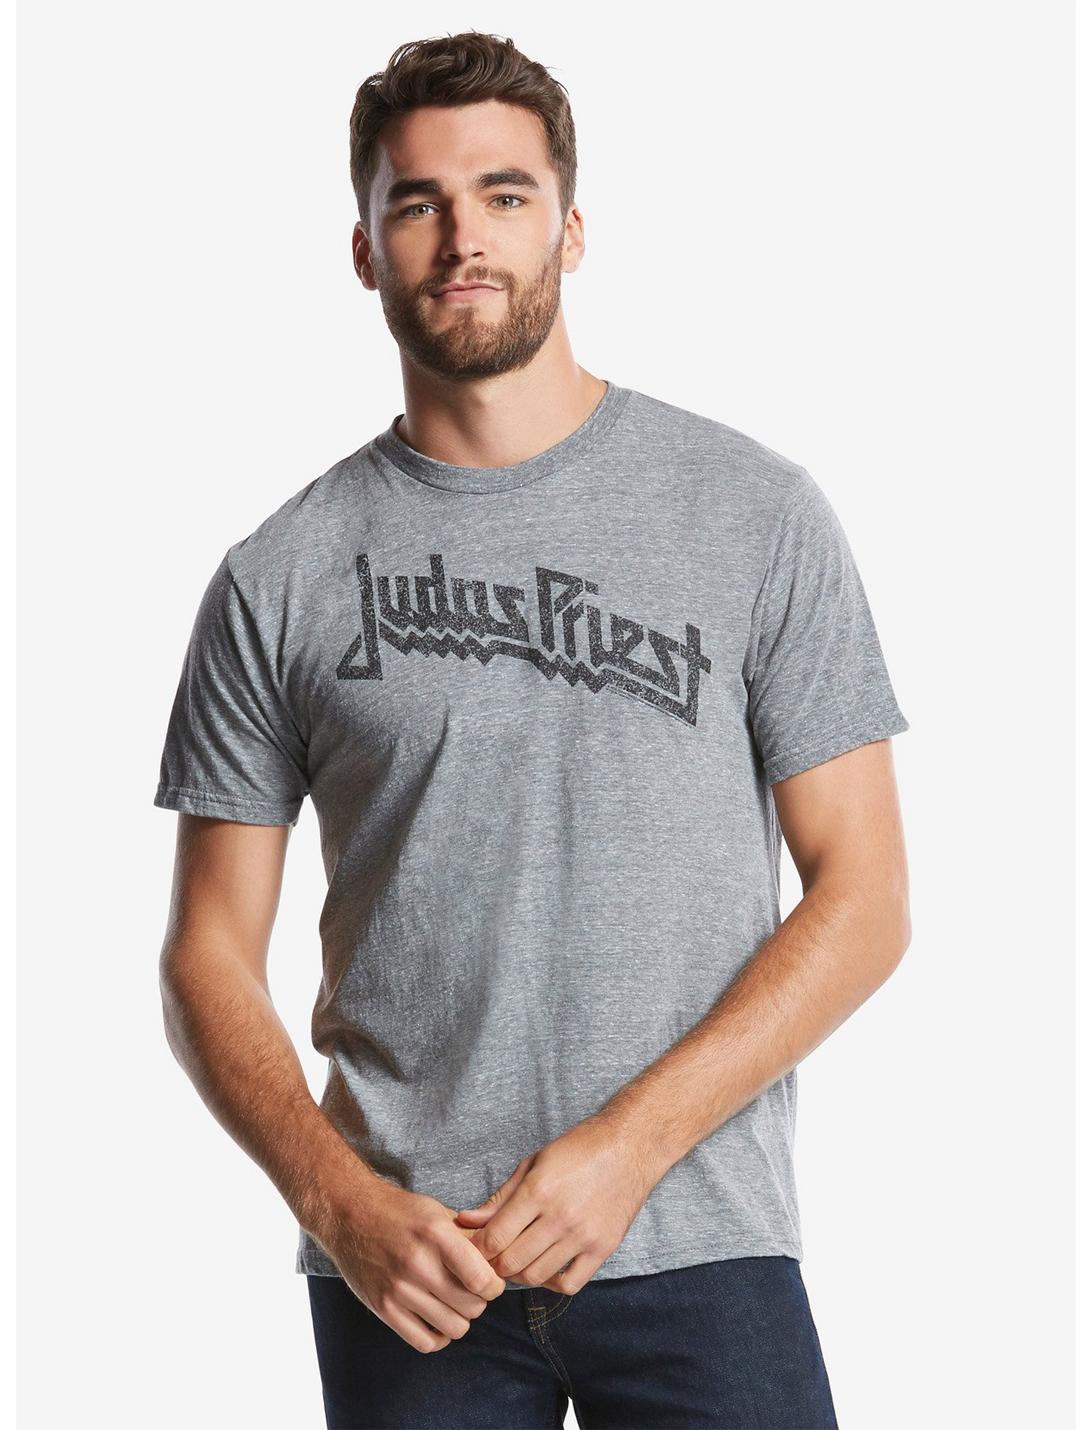 Judas Priest Vintage T-Shirt, GREY, hi-res